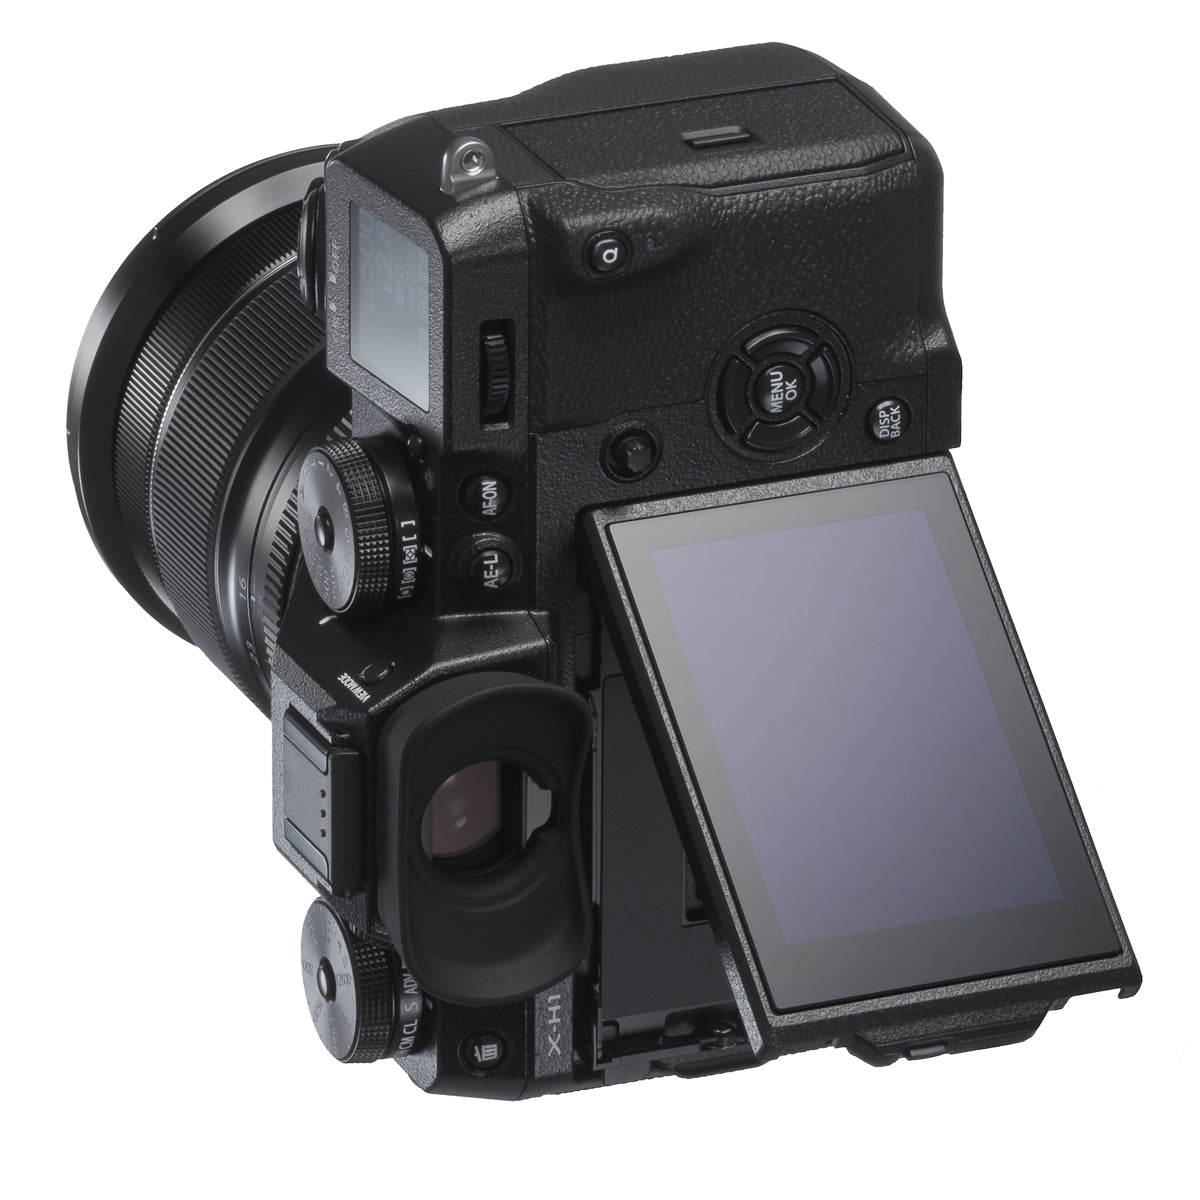 Fujifilm X-H1 Digital Camera Body (Black)